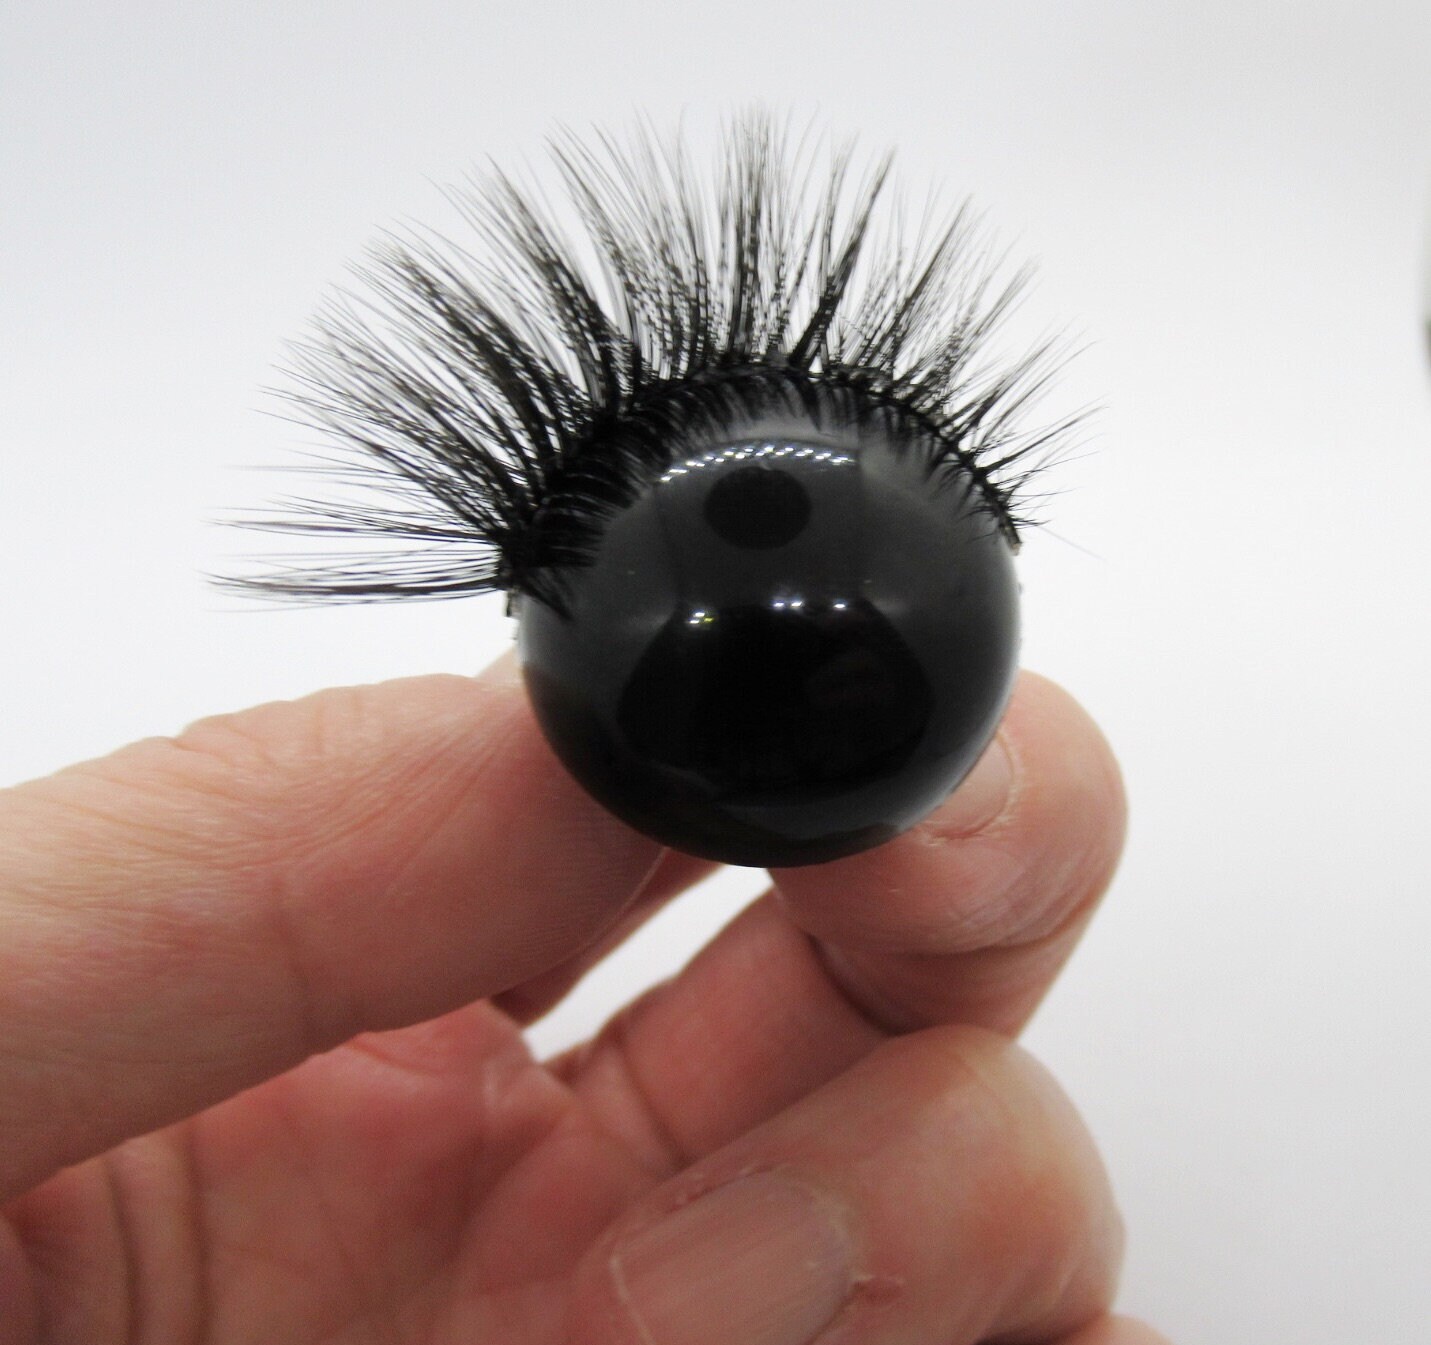 12mm Amigurumi Safety Eyes in Black Plastic for Doll, Toys